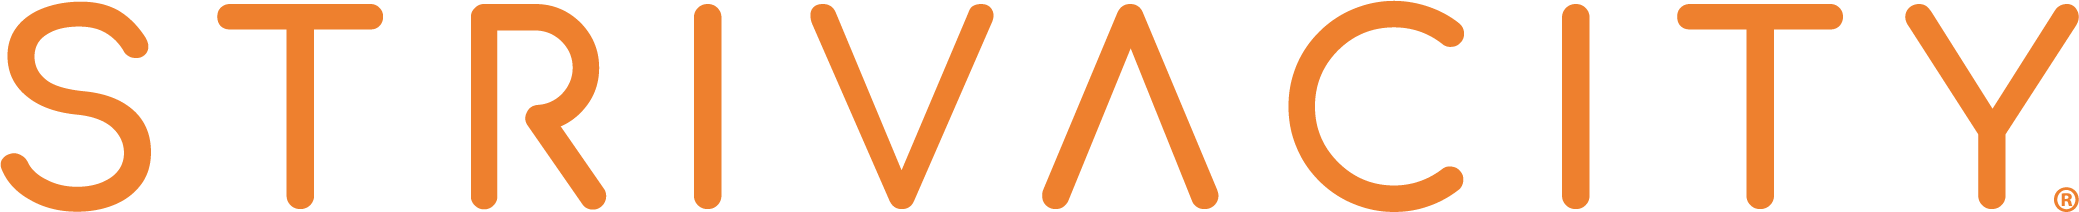 Strivacity-logo (1).png